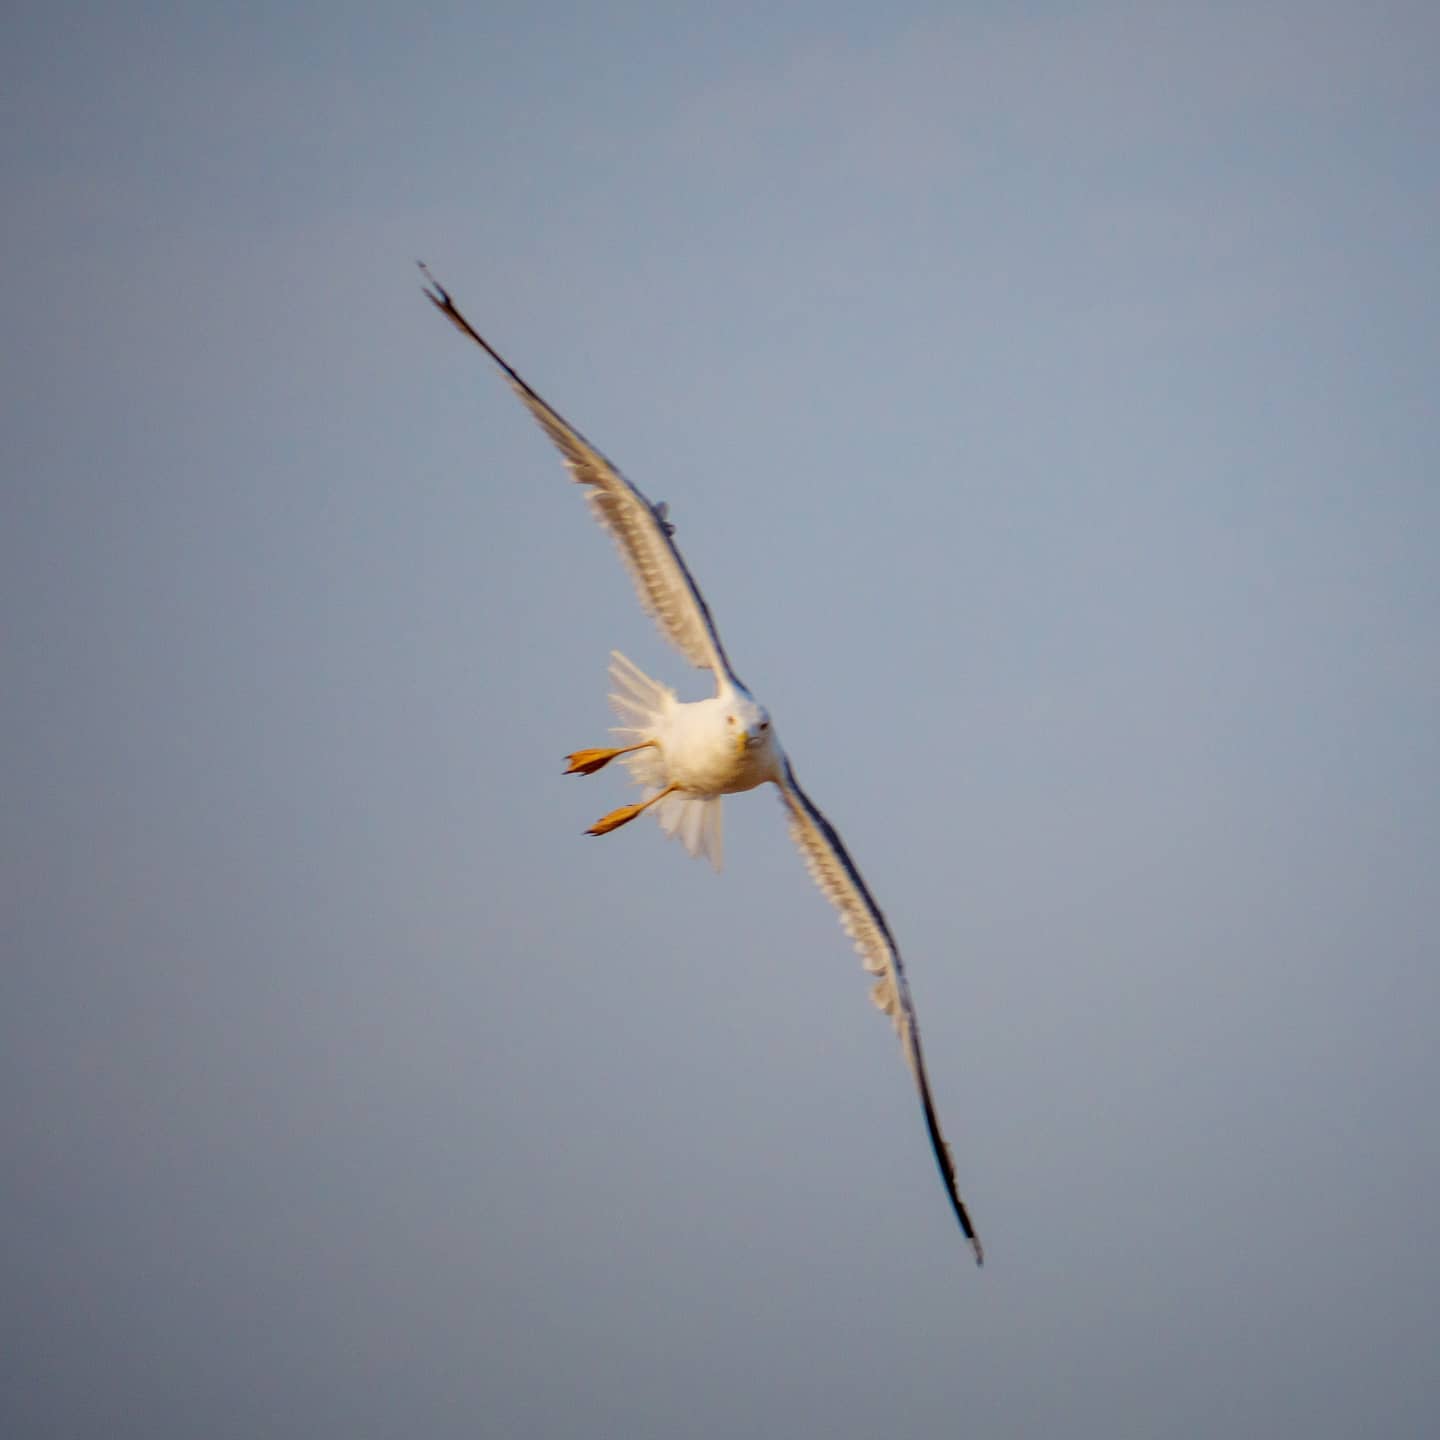 Gira a la izquierda.⠀⠀⠀.⠀⠀⠀.⠀⠀⠀.⠀⠀⠀#lumixg9 #microfourthirds #birdphotography #seagull